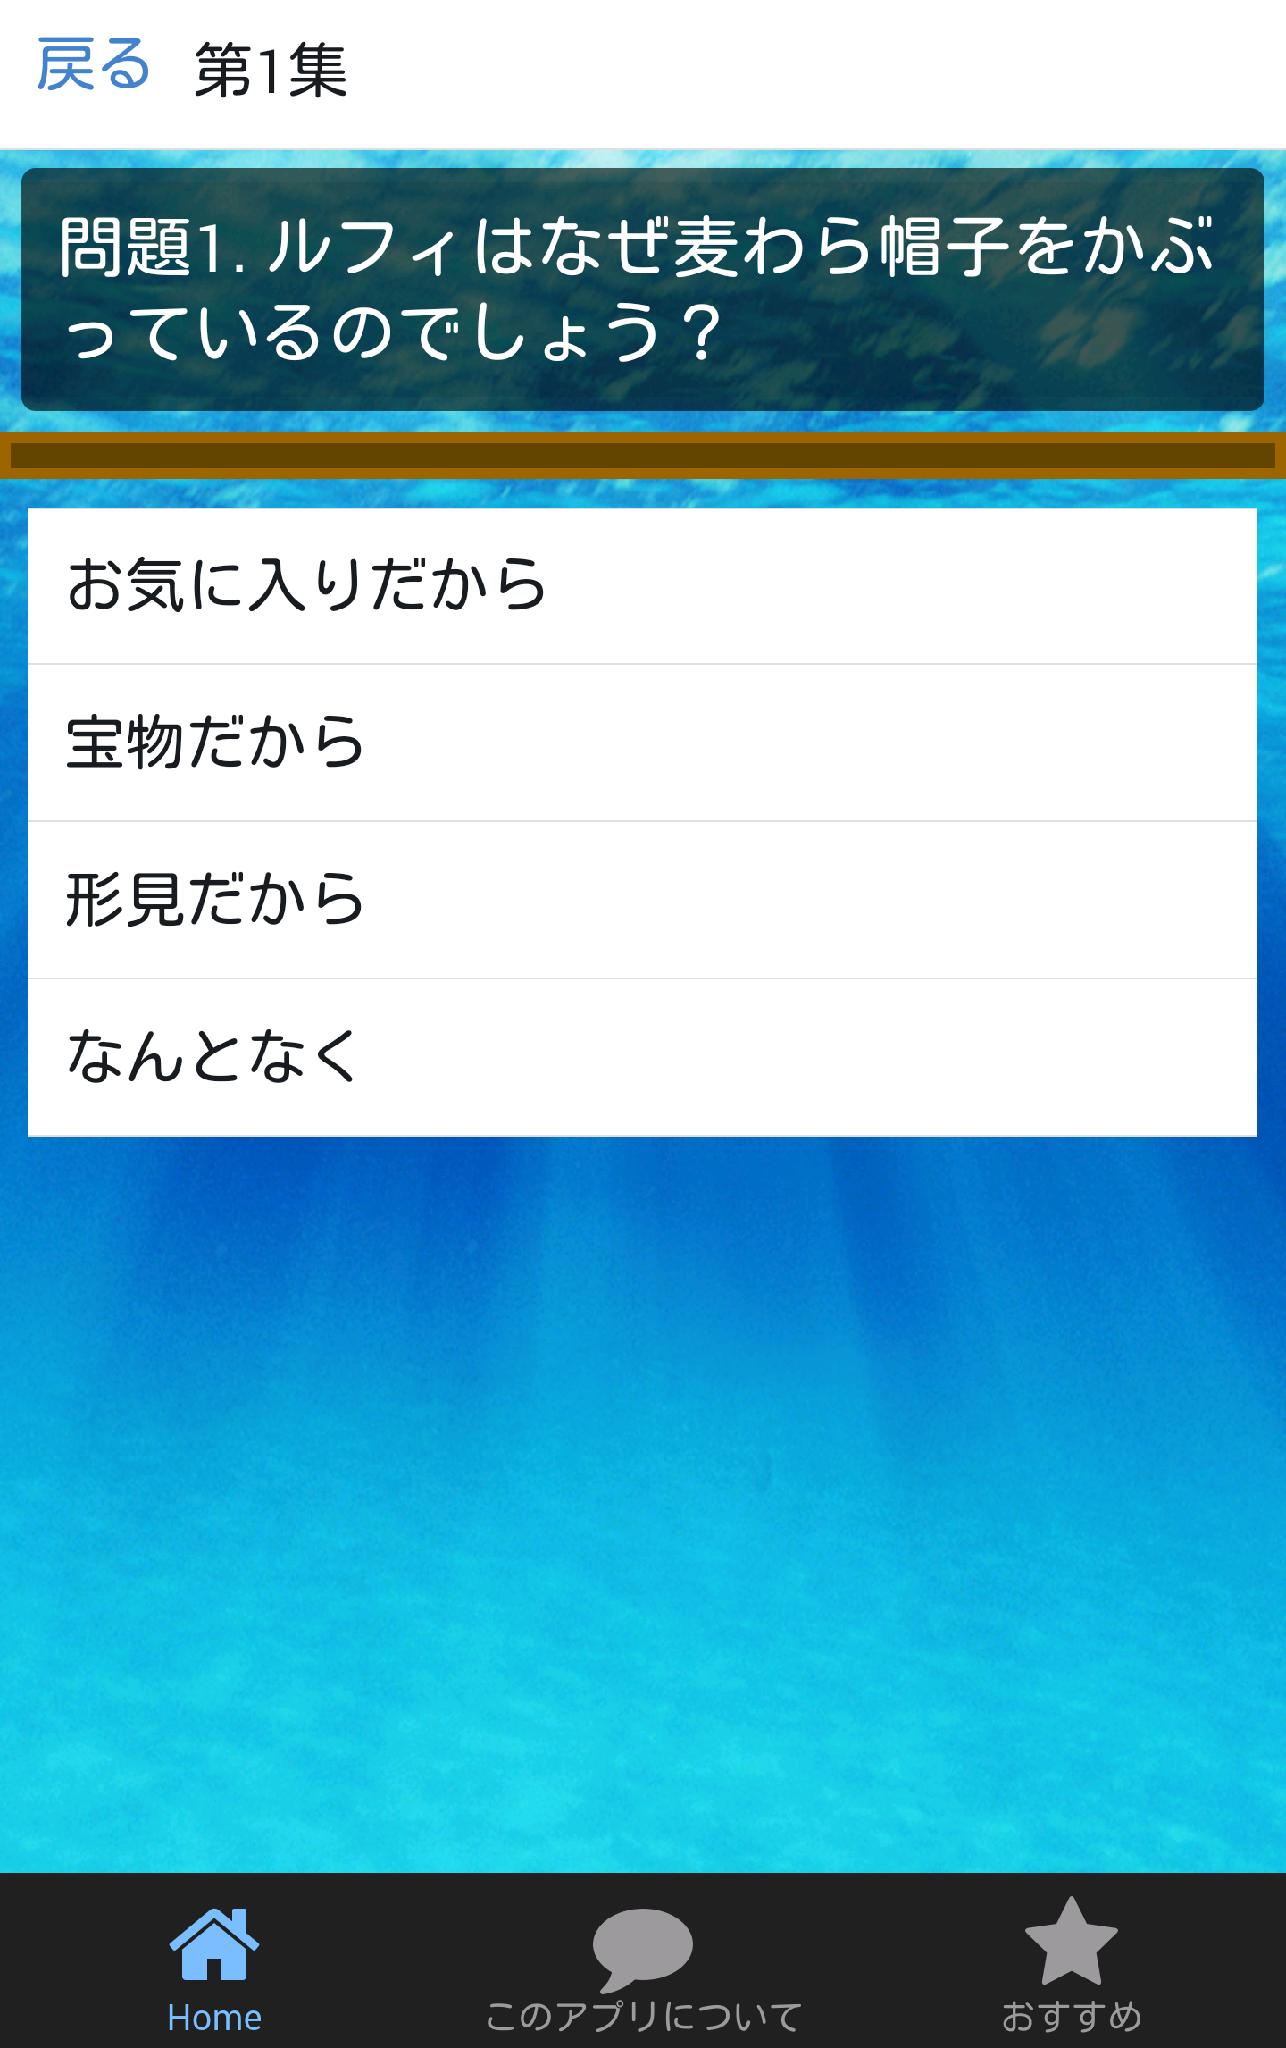 Android용 クイズｆｏｒ One Piece ワンピース 海洋冒険ロマン Apk 다운로드